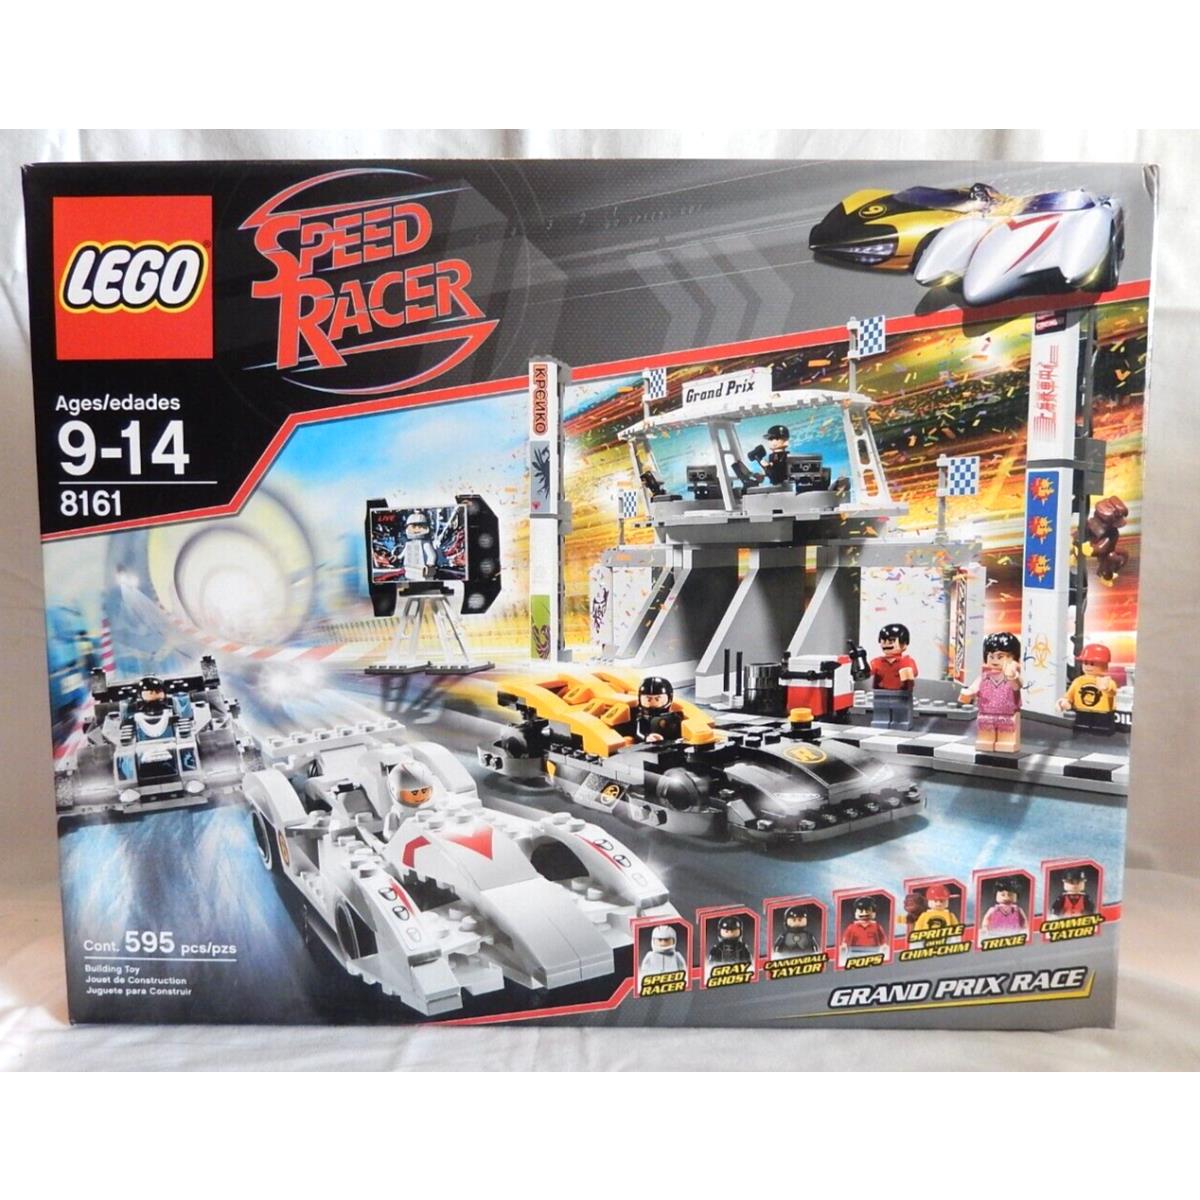 Lego 8161 Grand Prix Race Speed Racer Complete